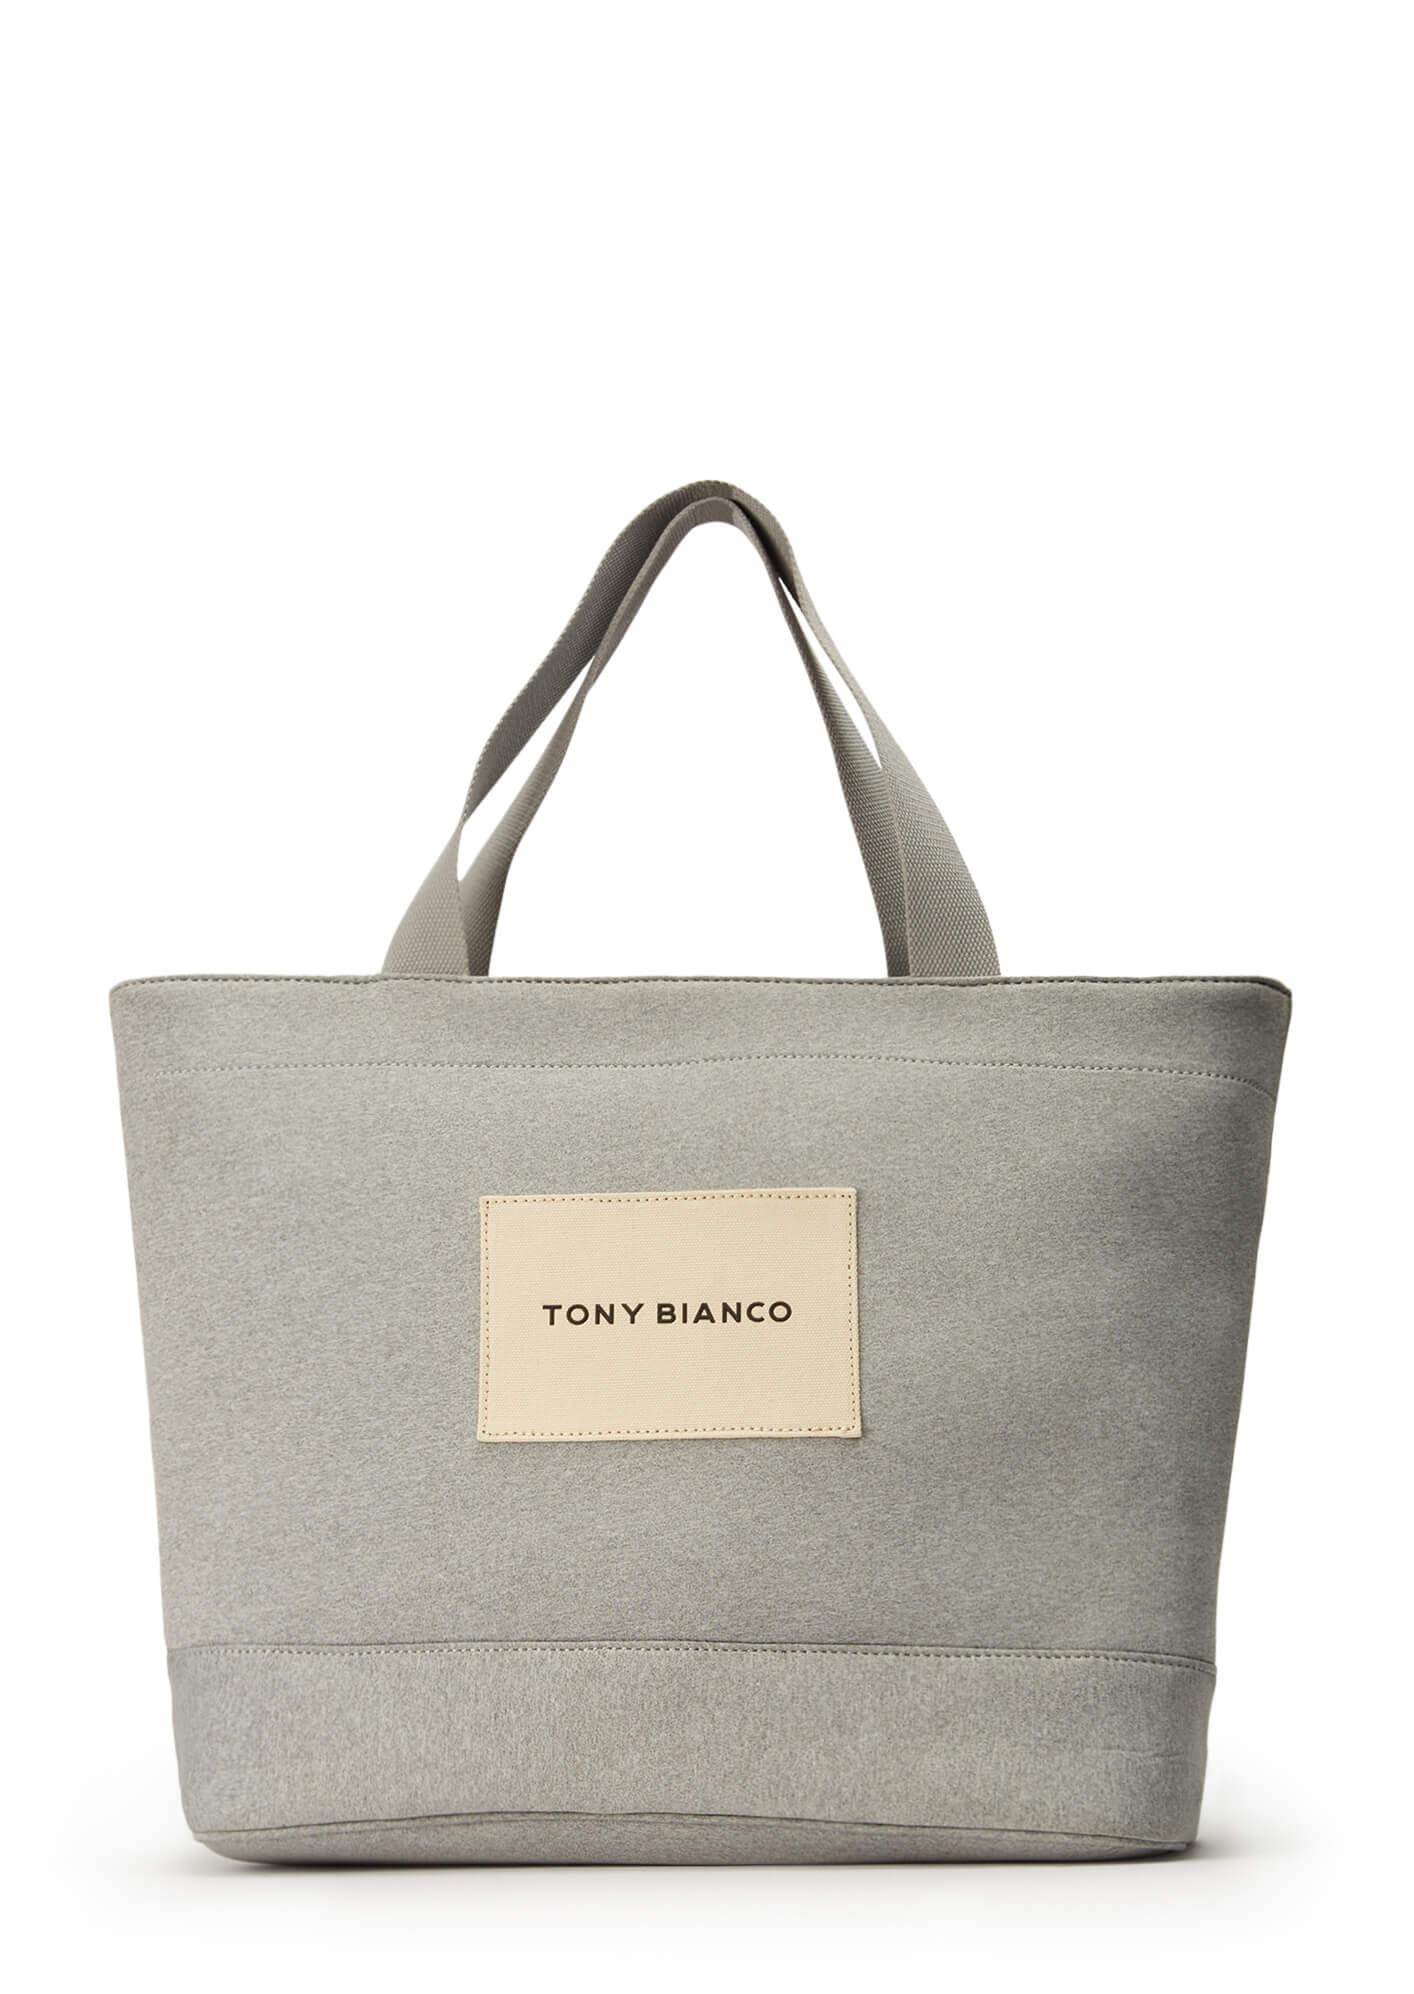 Tony Bianco Jenna Shoulder Bag in Gray | Lyst